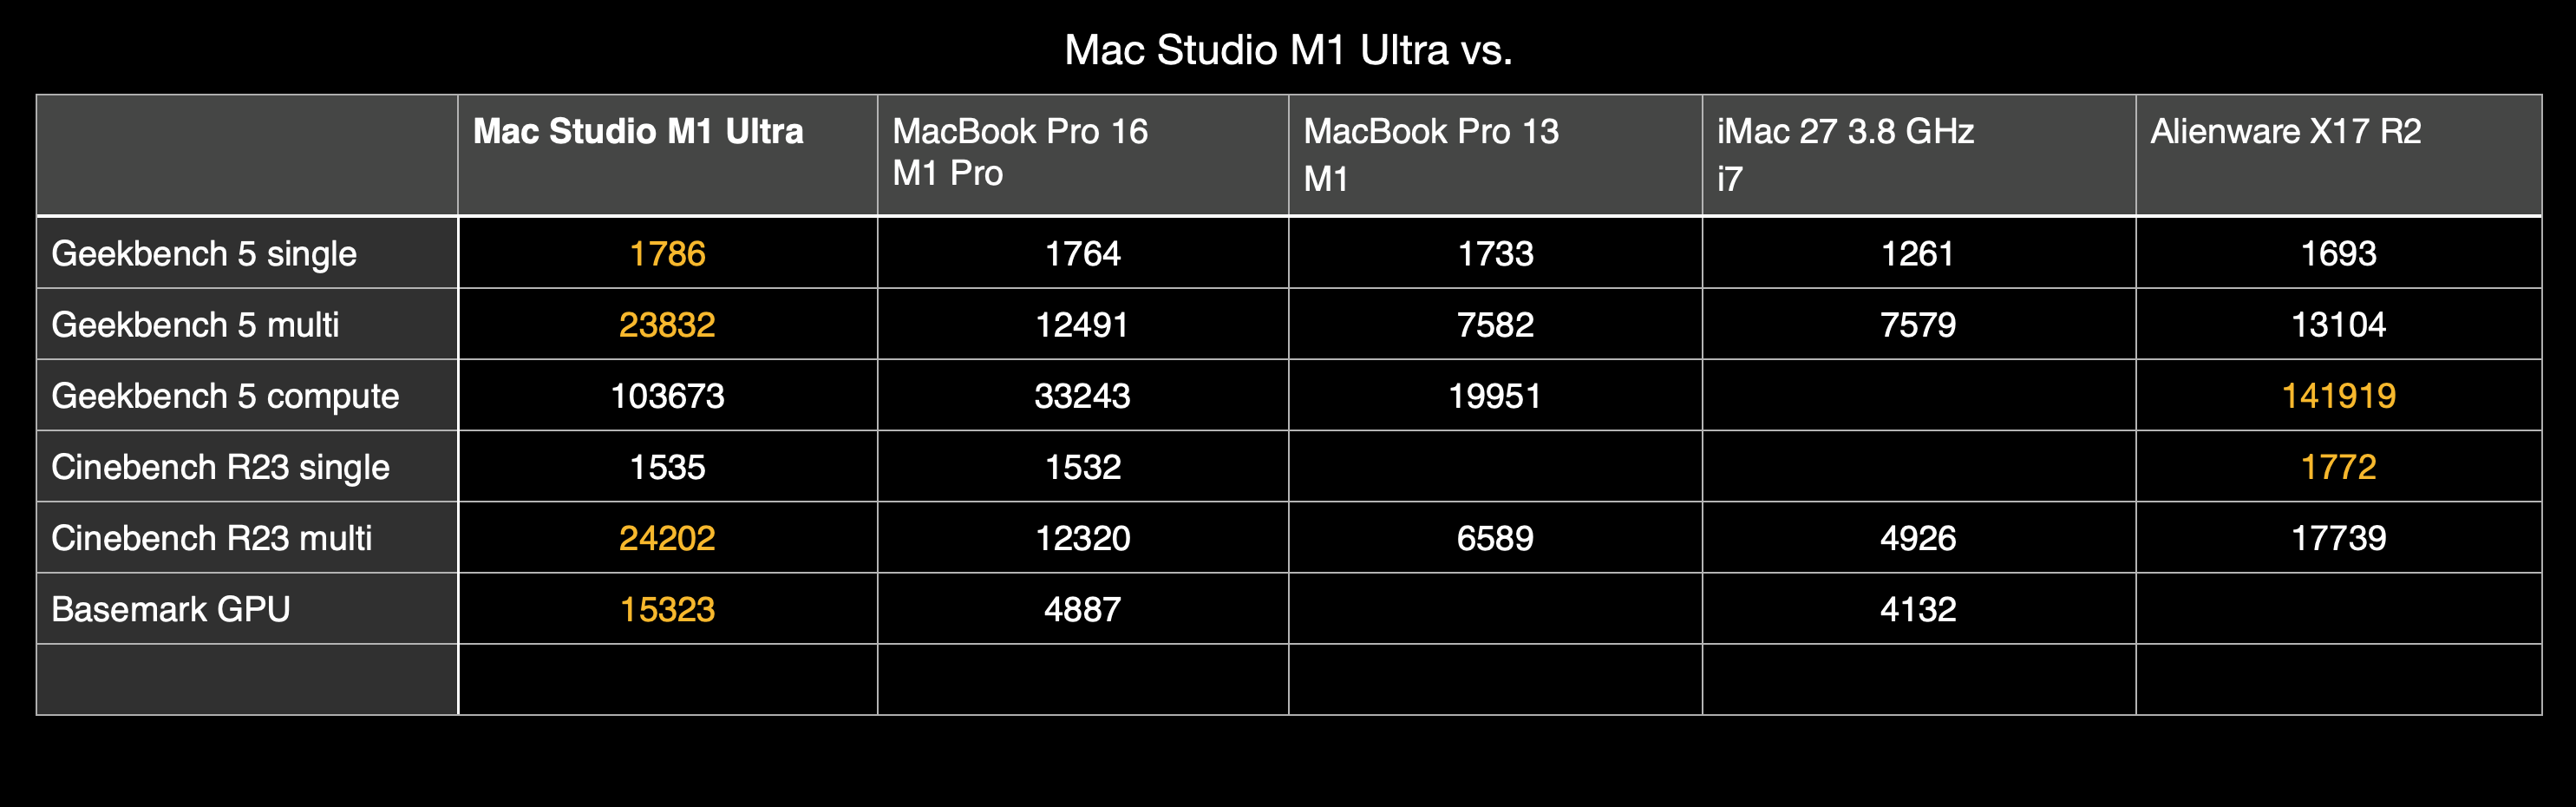 Mac Studio M1 Ultra vs